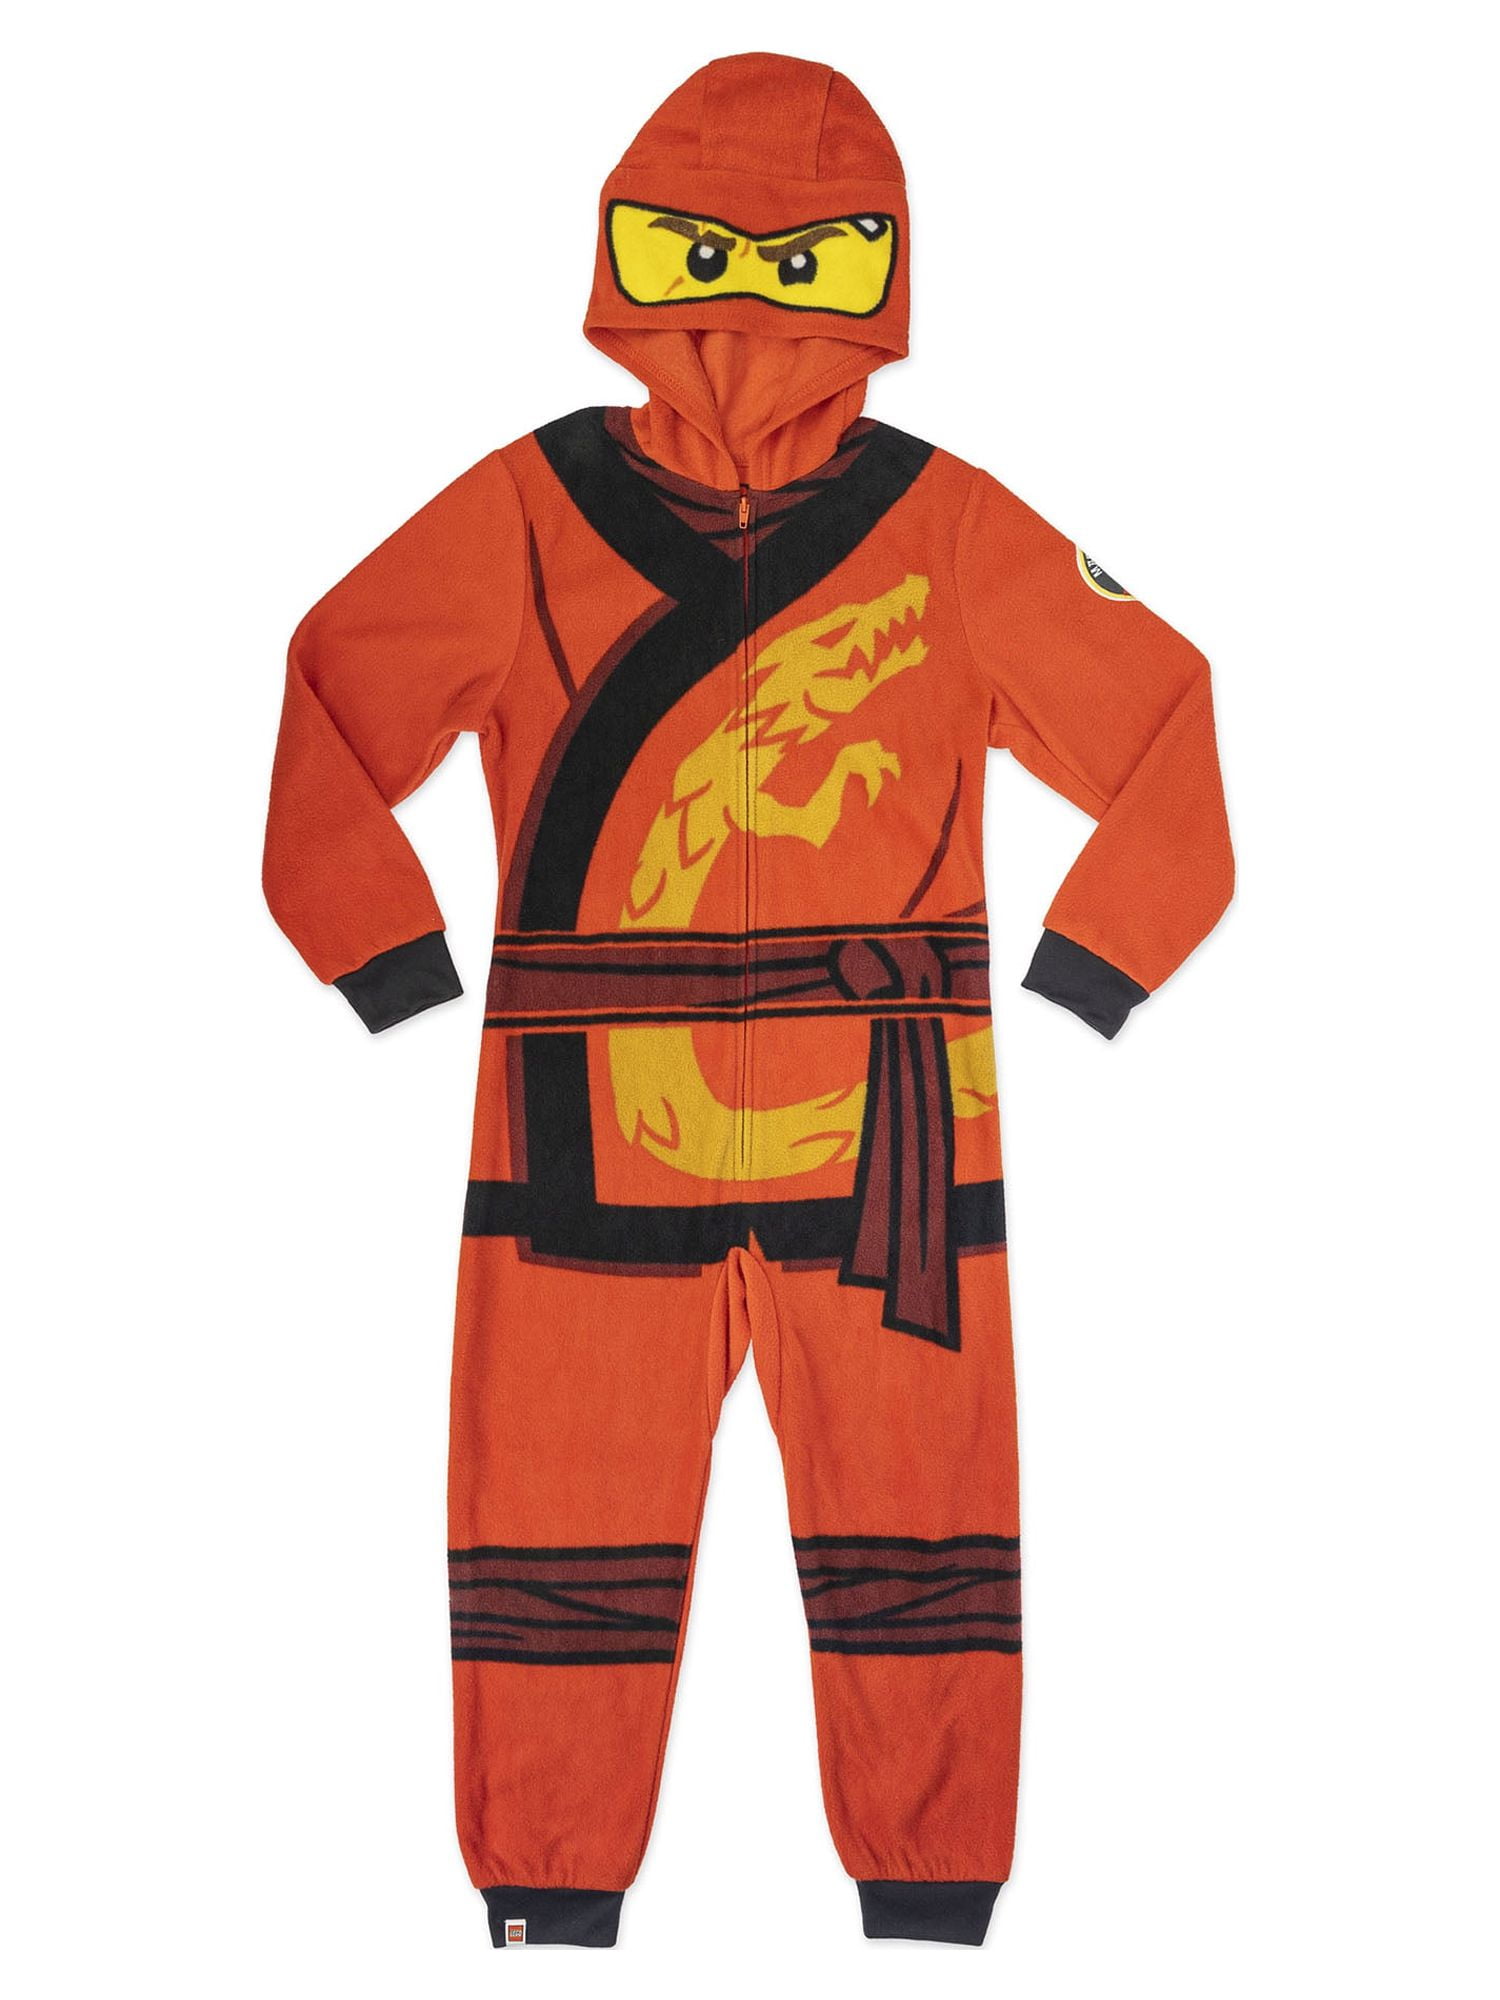 Ninjago Boys 1 Piece Hooded Costume Union Pajama, Sizes 4-12 